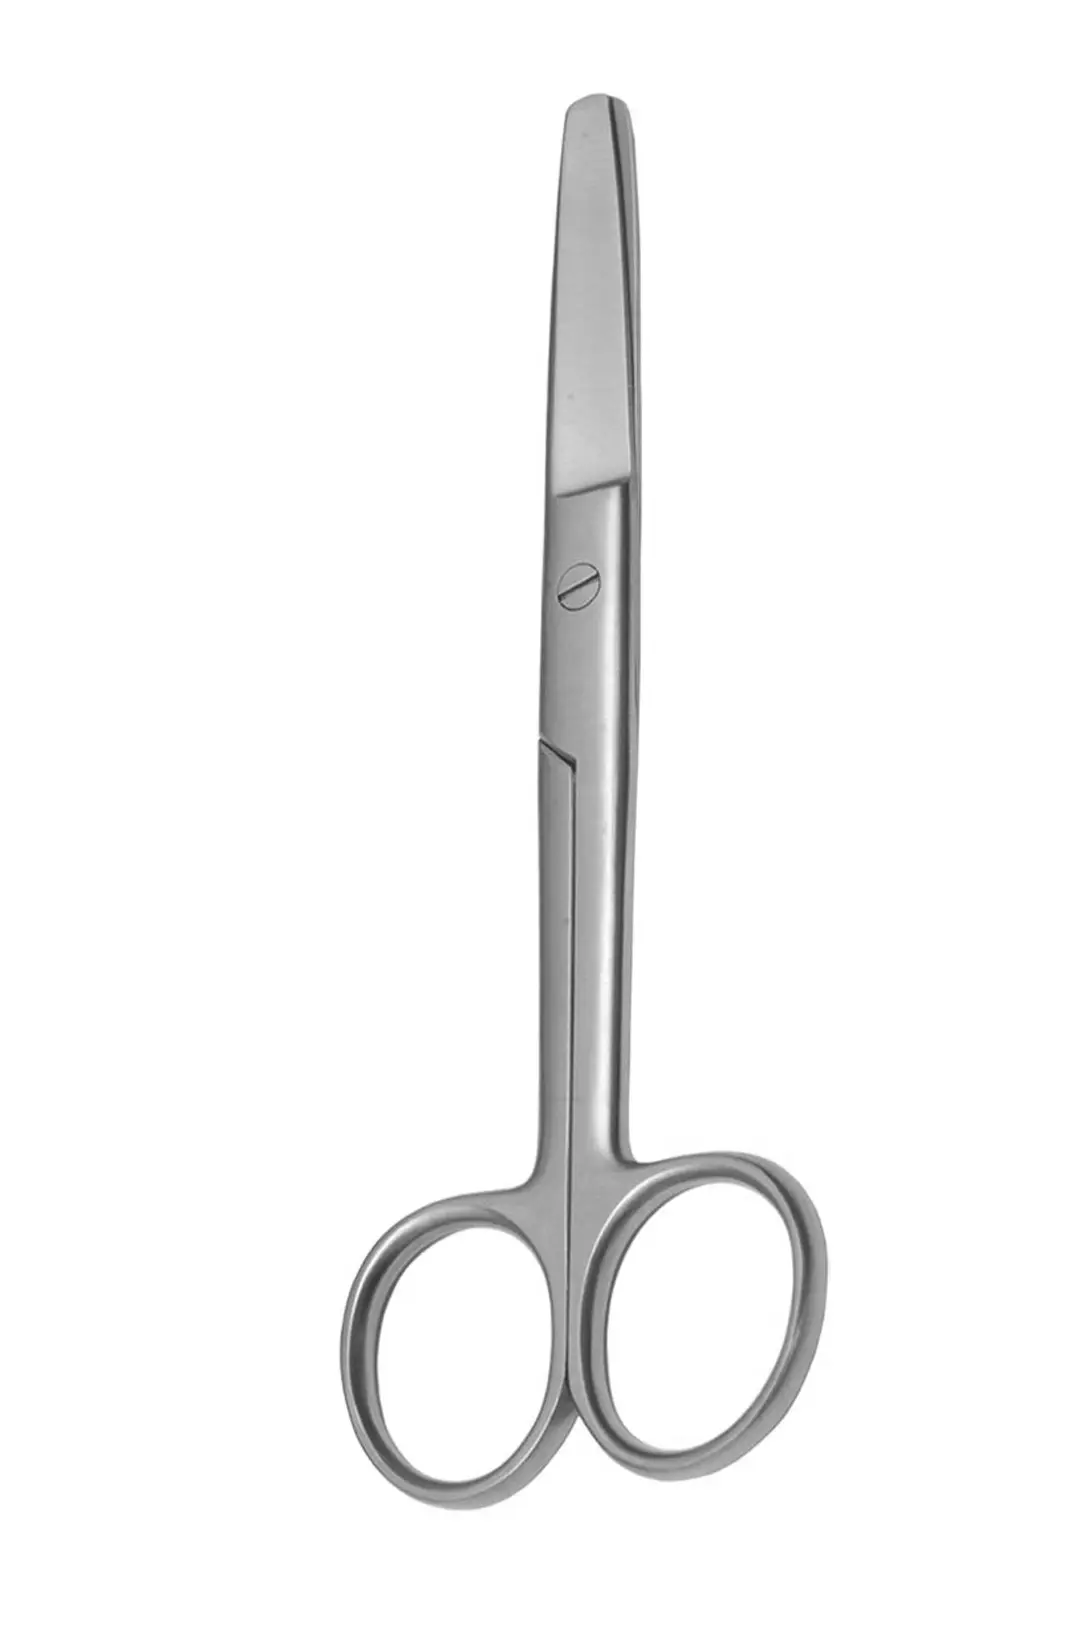 Excellent bandage scissors 14.0 cm, curved cutting edge